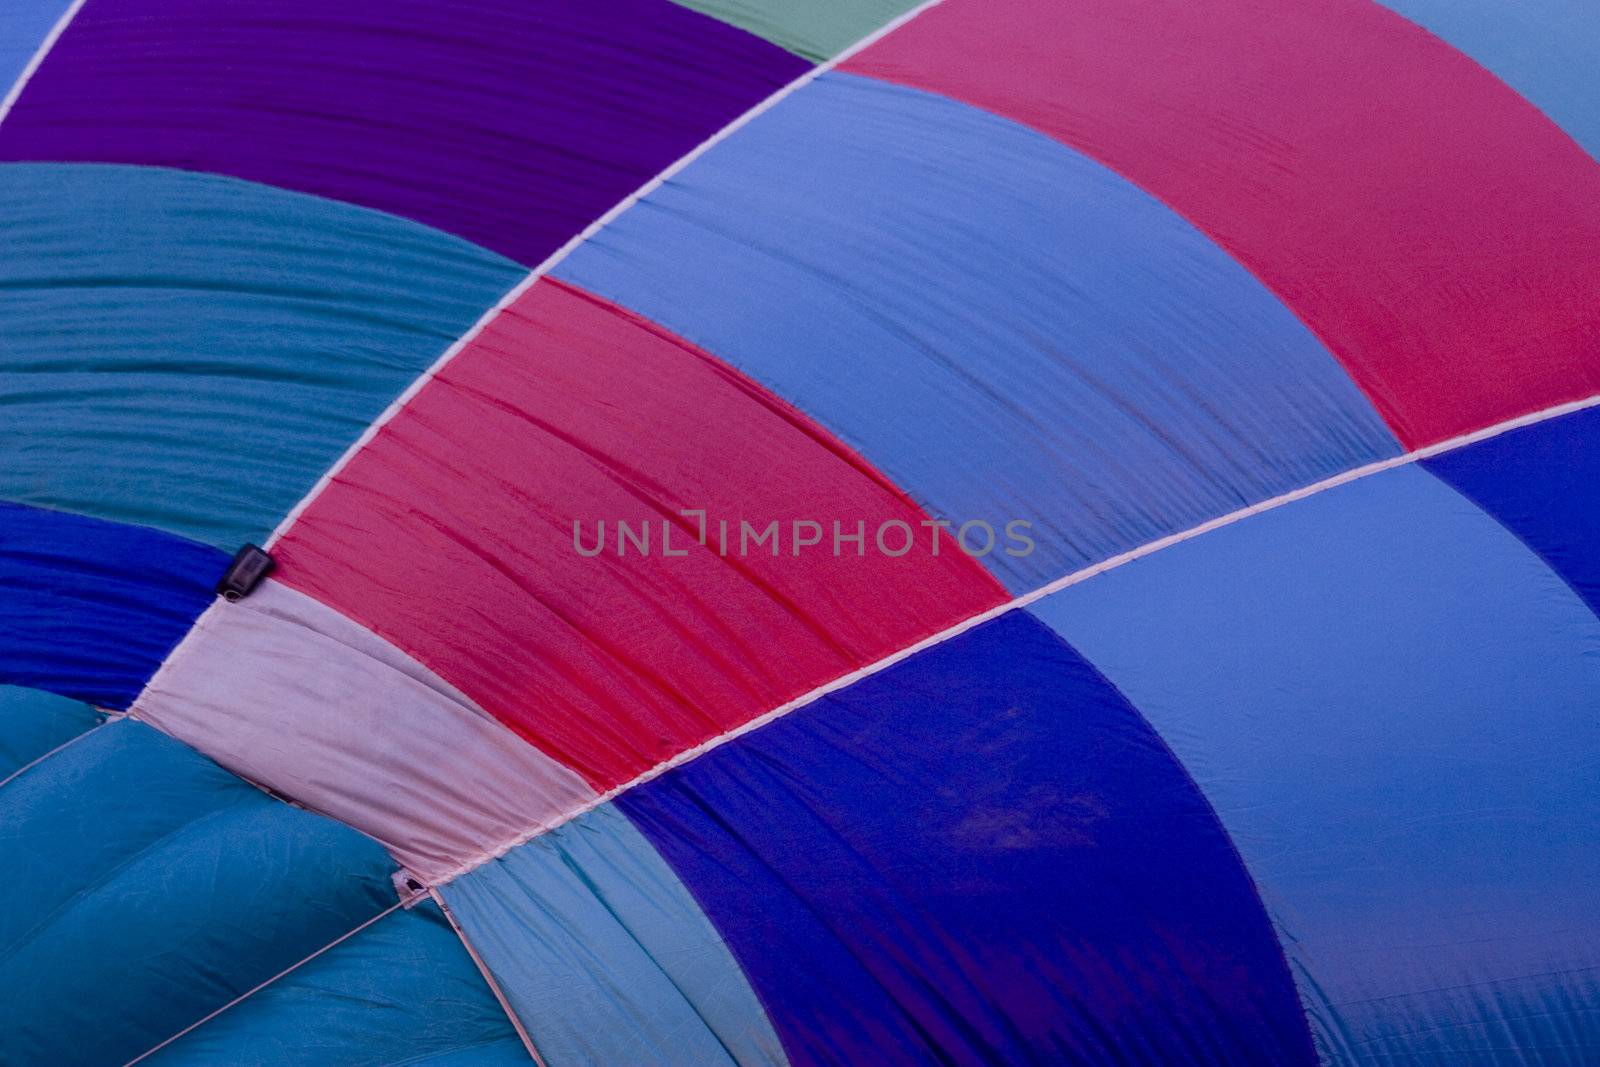 Hot air balloon textures. Close up shots of hot air ballons.